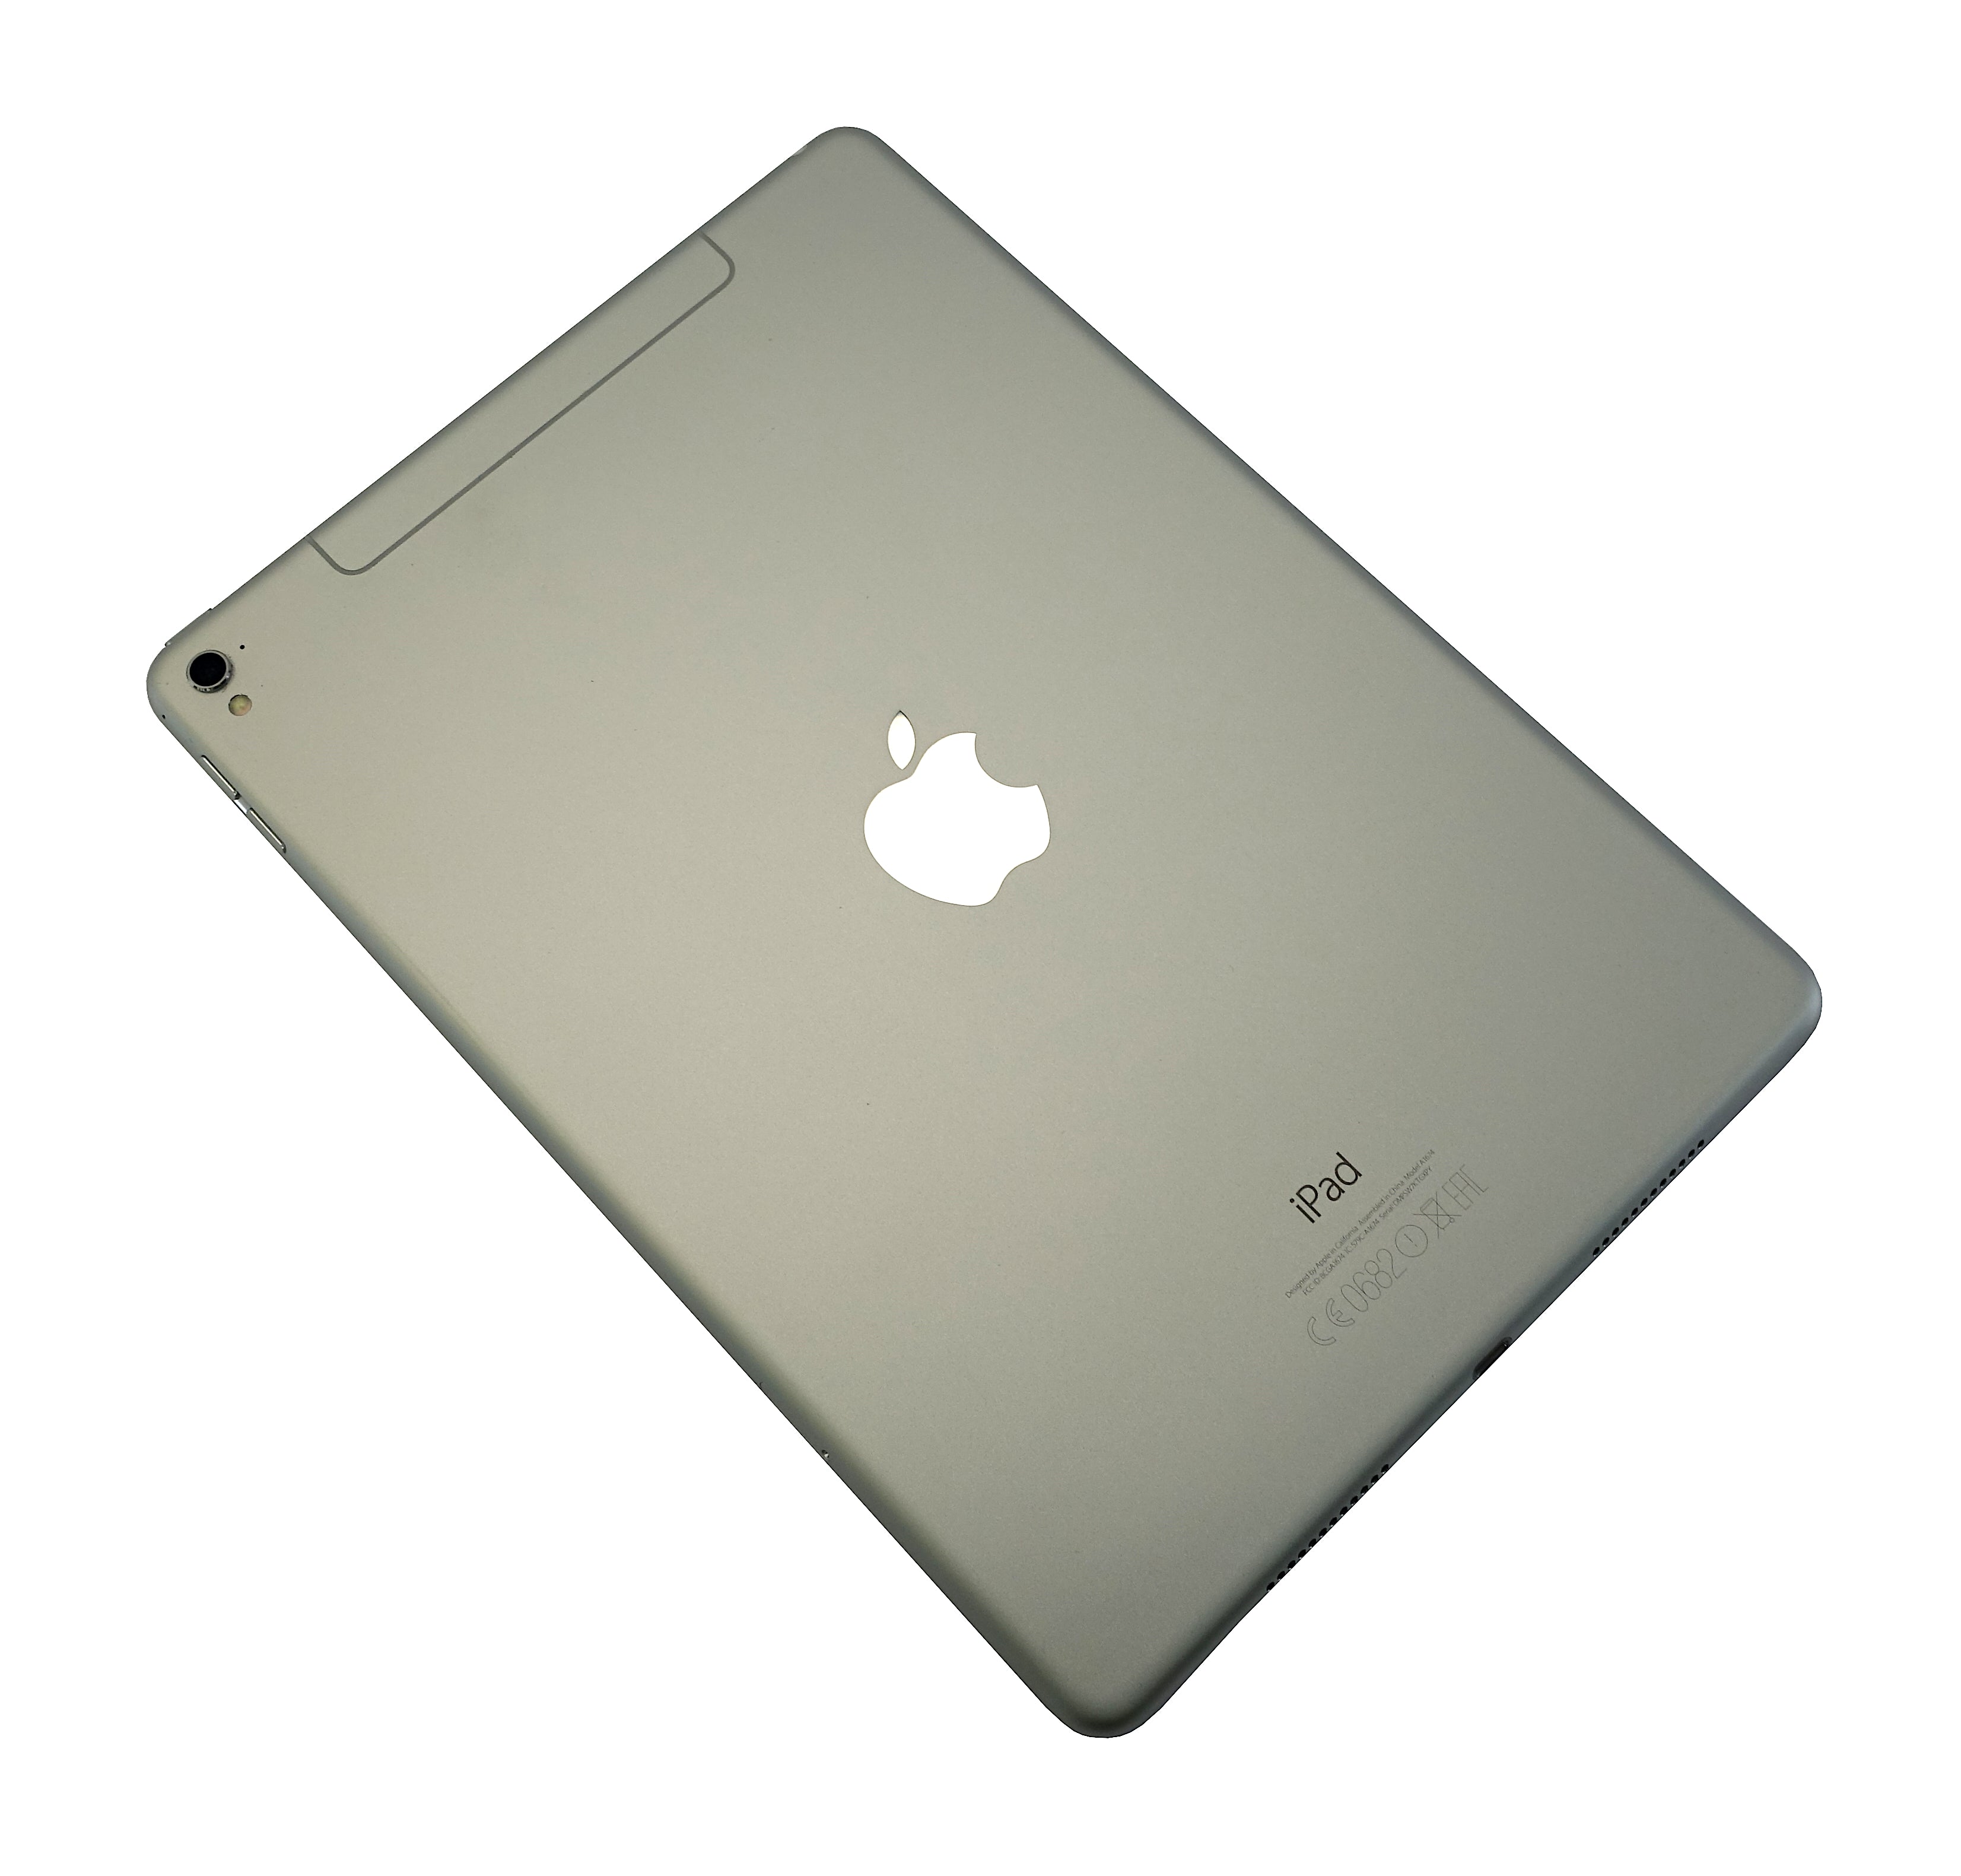 Apple iPad Pro 9.7" Tablet, 32GB, WiFi + GSM, Silver, A1674